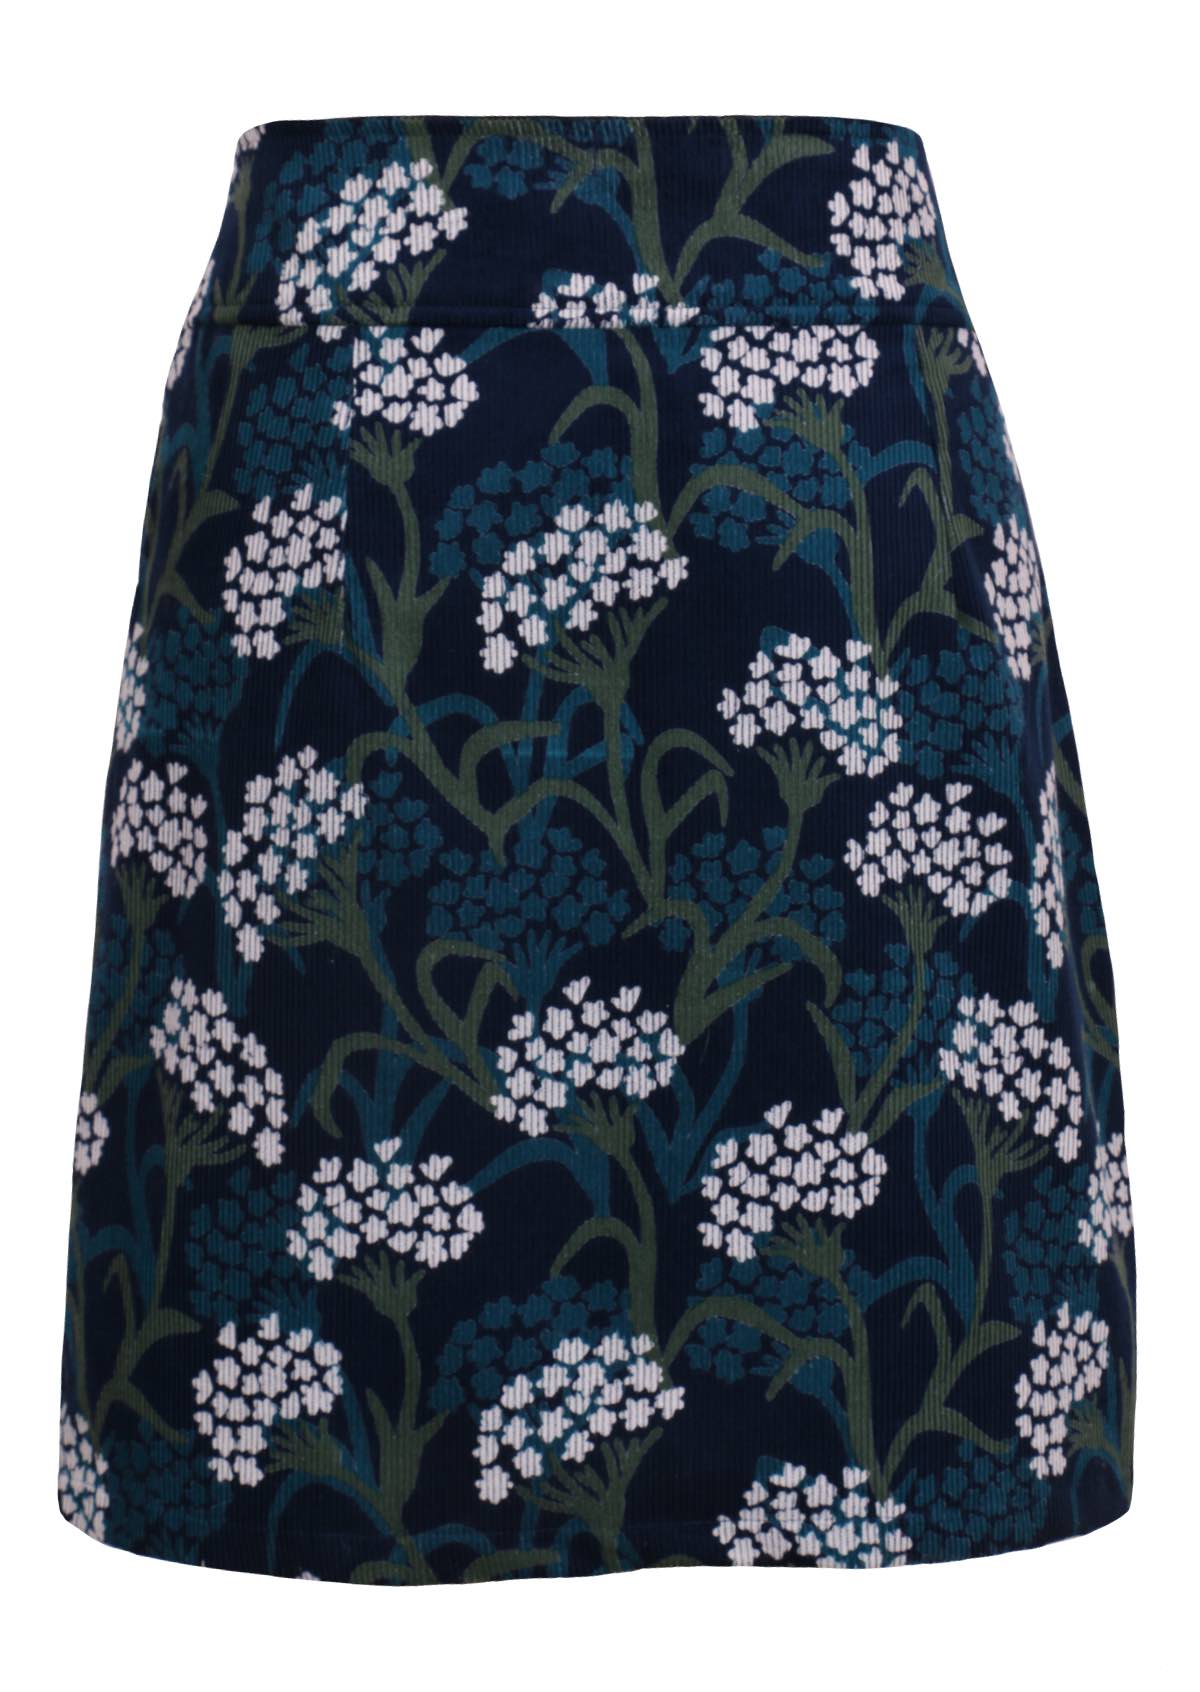 Floral corduroy mid length skirt featuring a hidden side zip. 